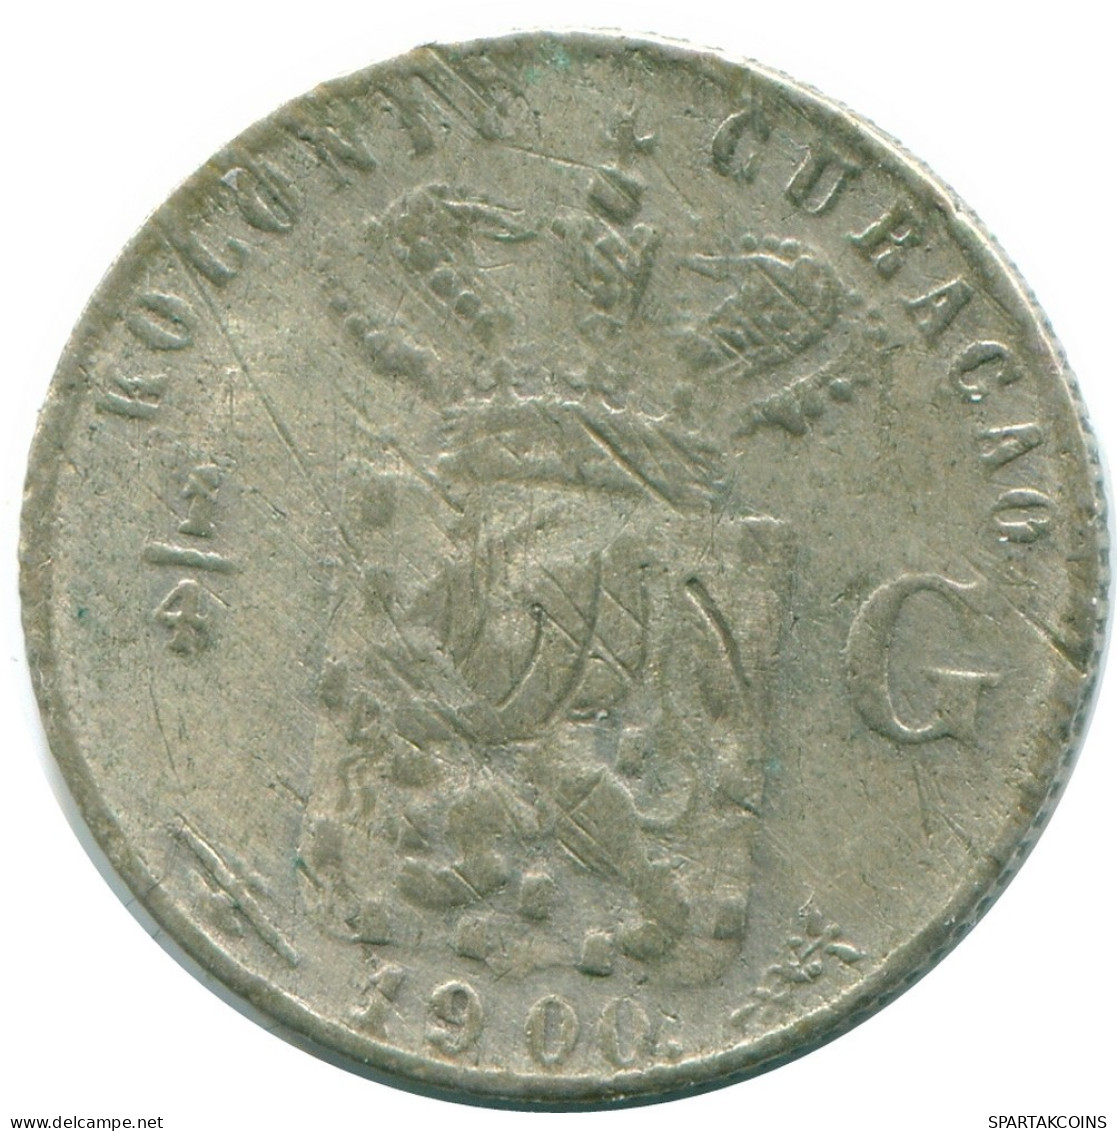 1/4 GULDEN 1900 CURACAO Netherlands SILVER Colonial Coin #NL10533.4.U.A - Curaçao